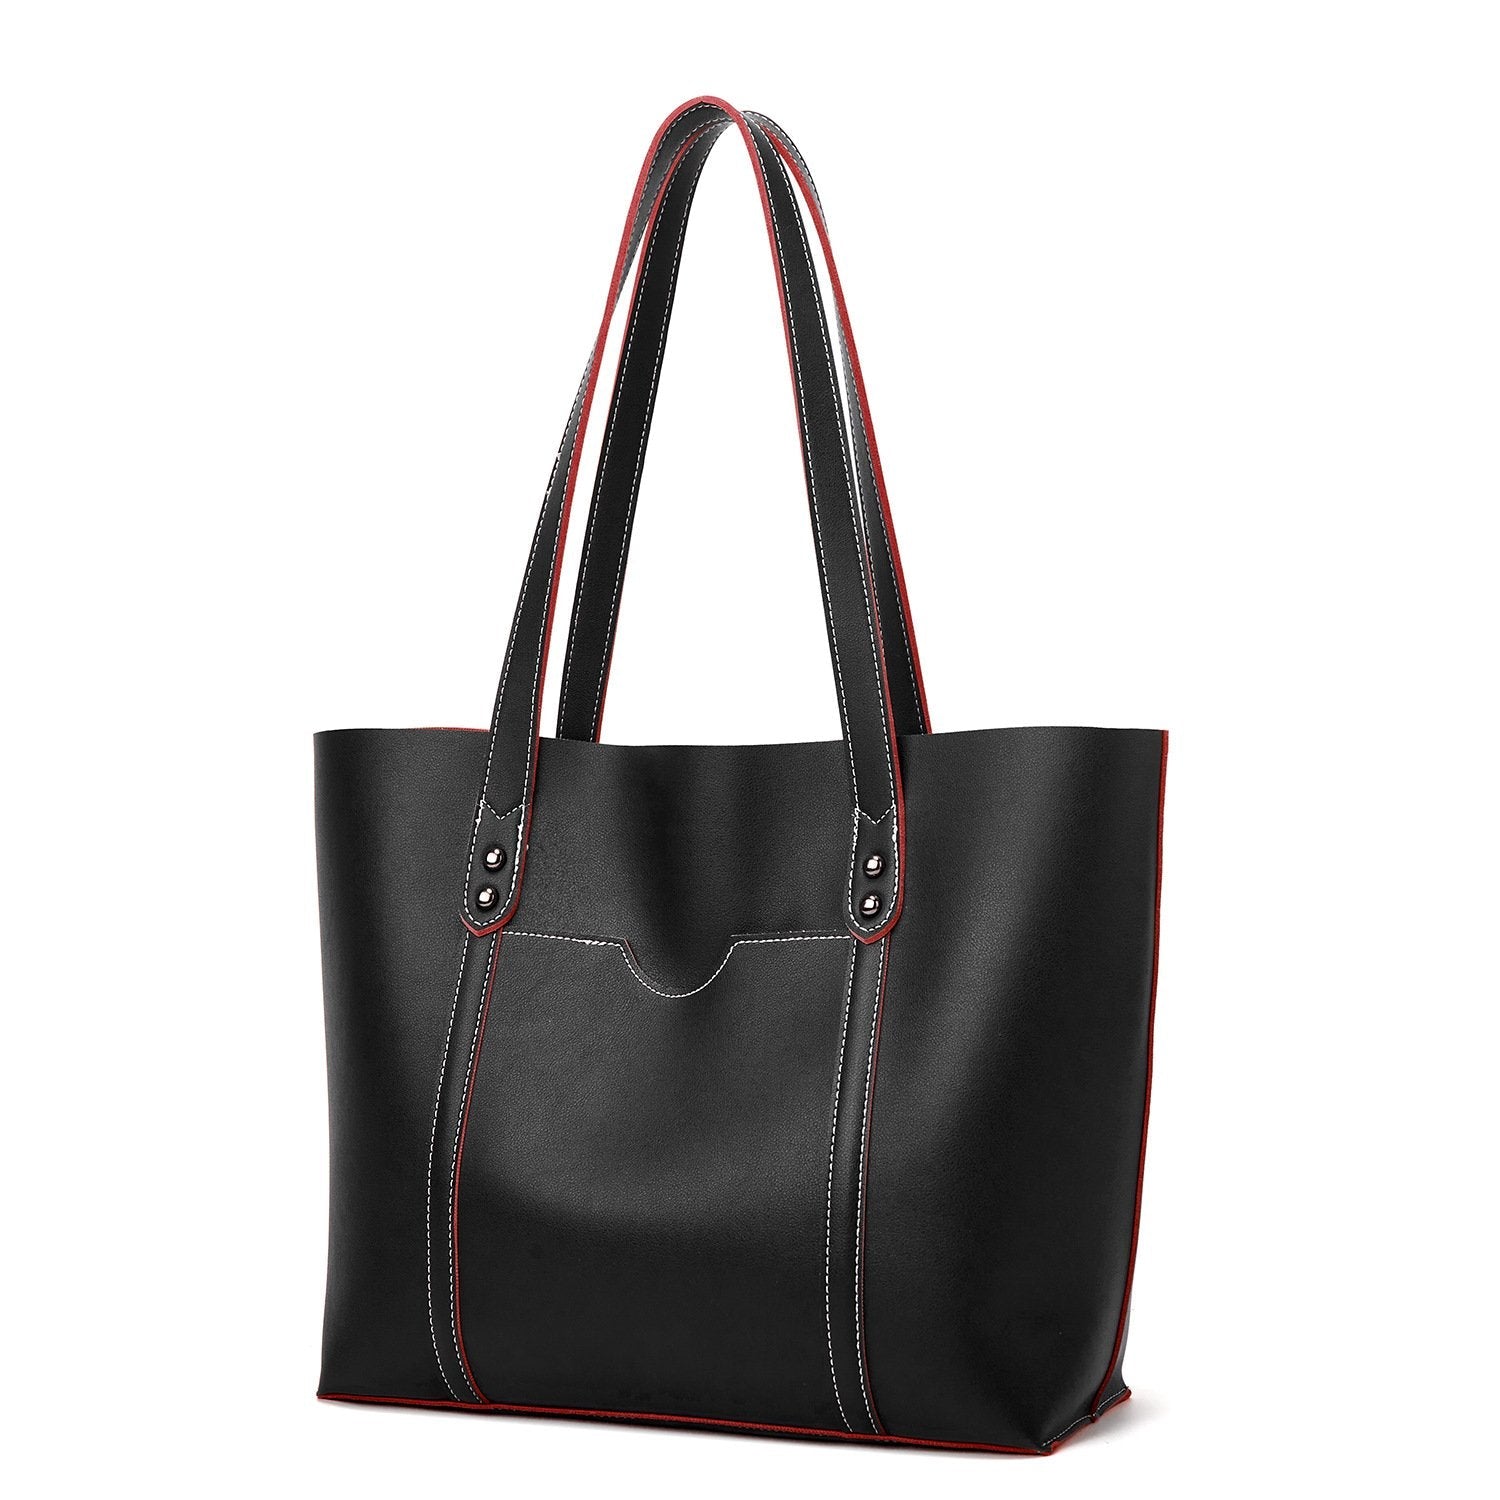 New Tote Bag Women's Shoulder Bag Fashion Fashion Handbag Large Capacity